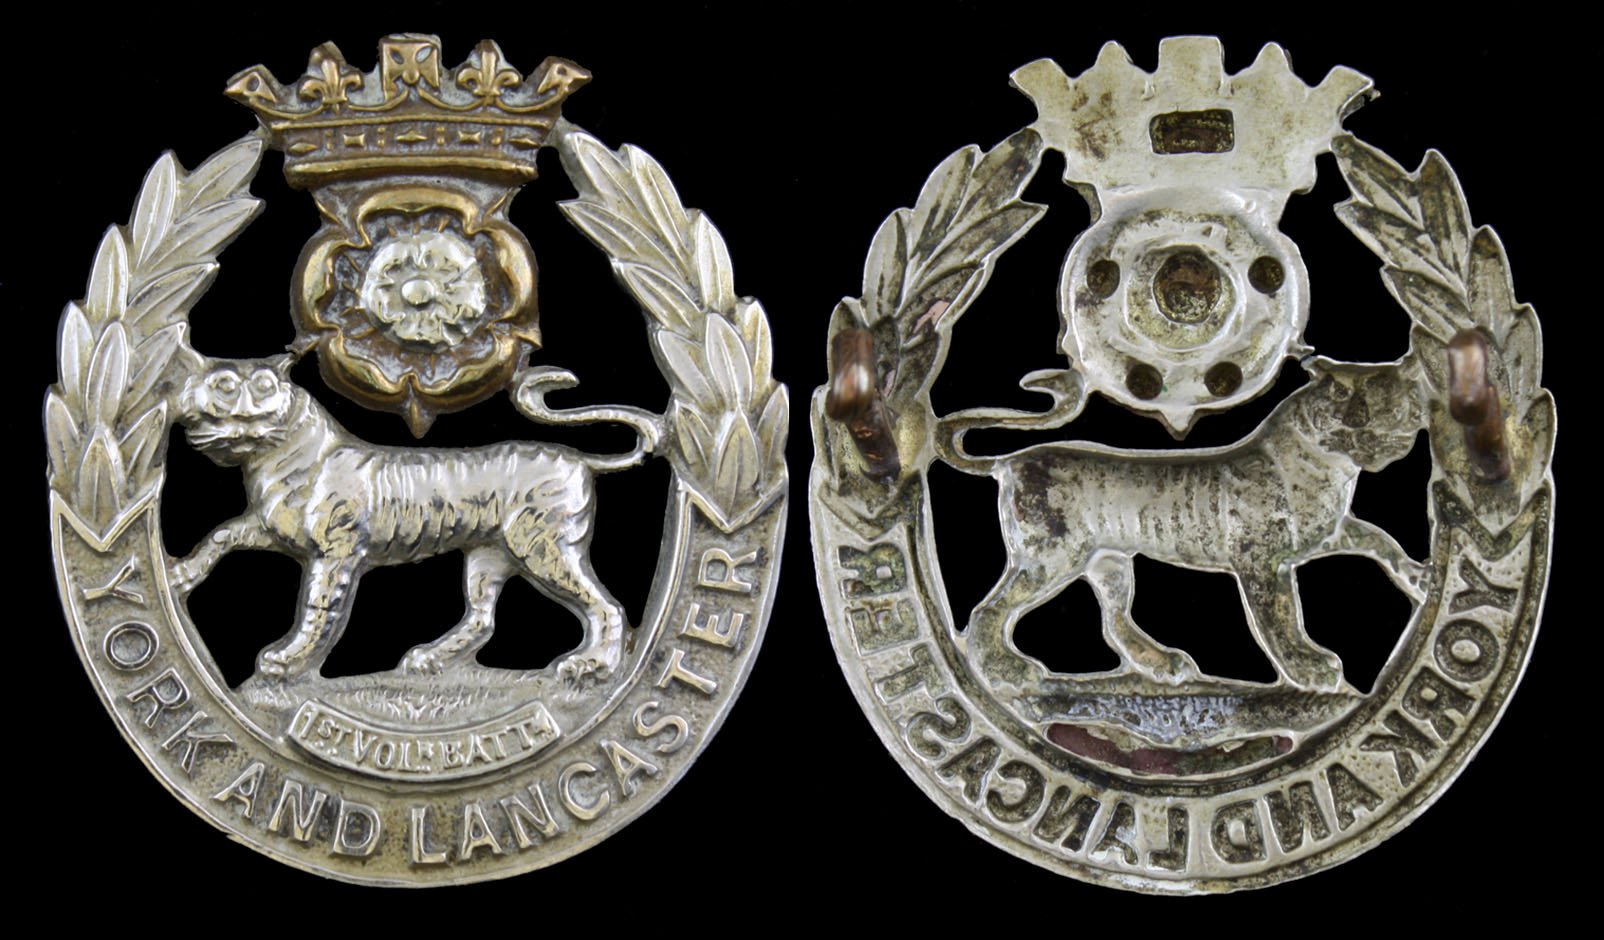 1st Volunteer (Hallamshire) Battalion Badge 1897 to 1908-2nd pattern